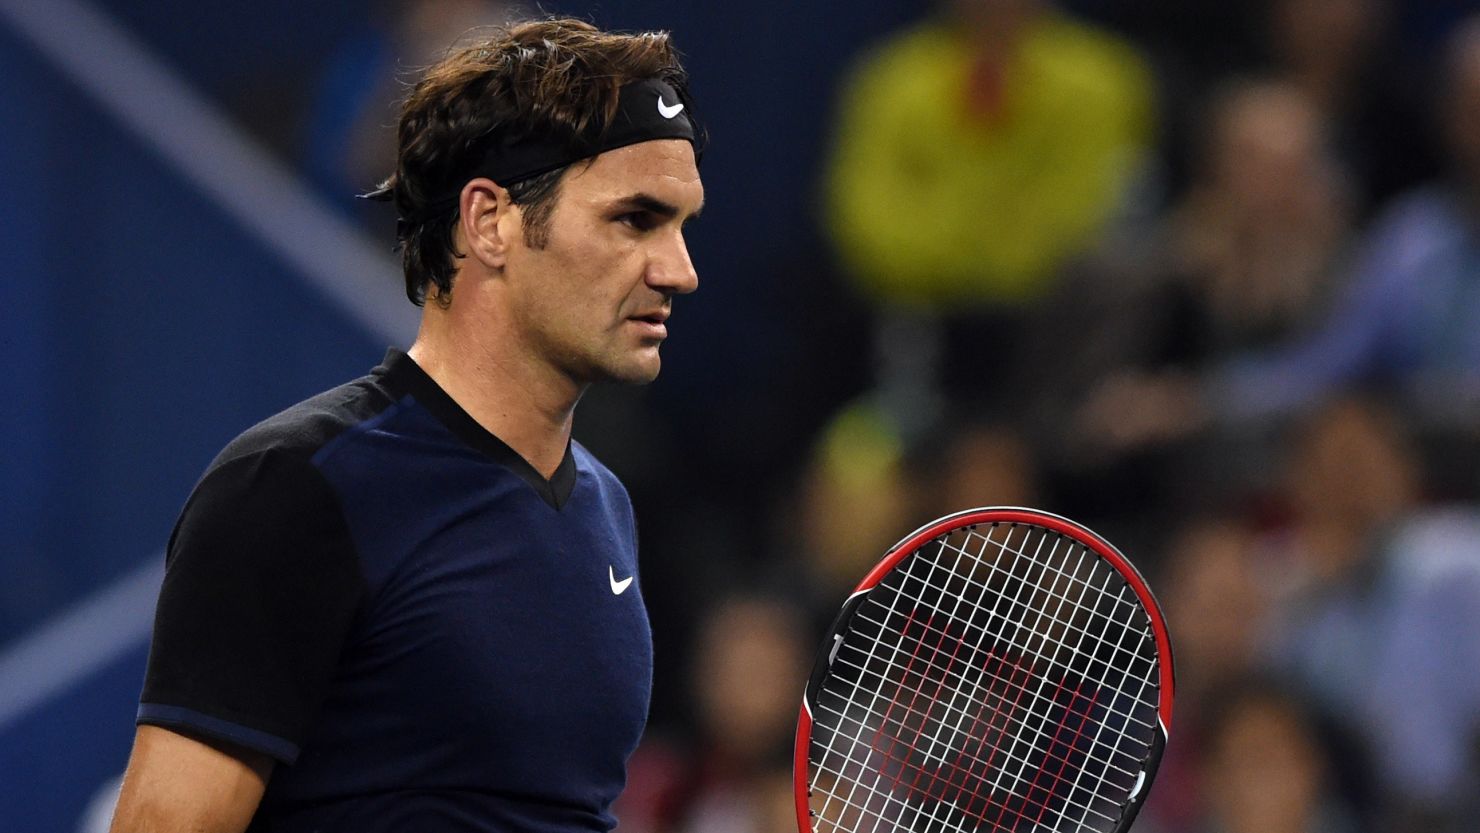 Swiss tennis star Roger Federer lost in his first match since September's Davis Cup playoffs.